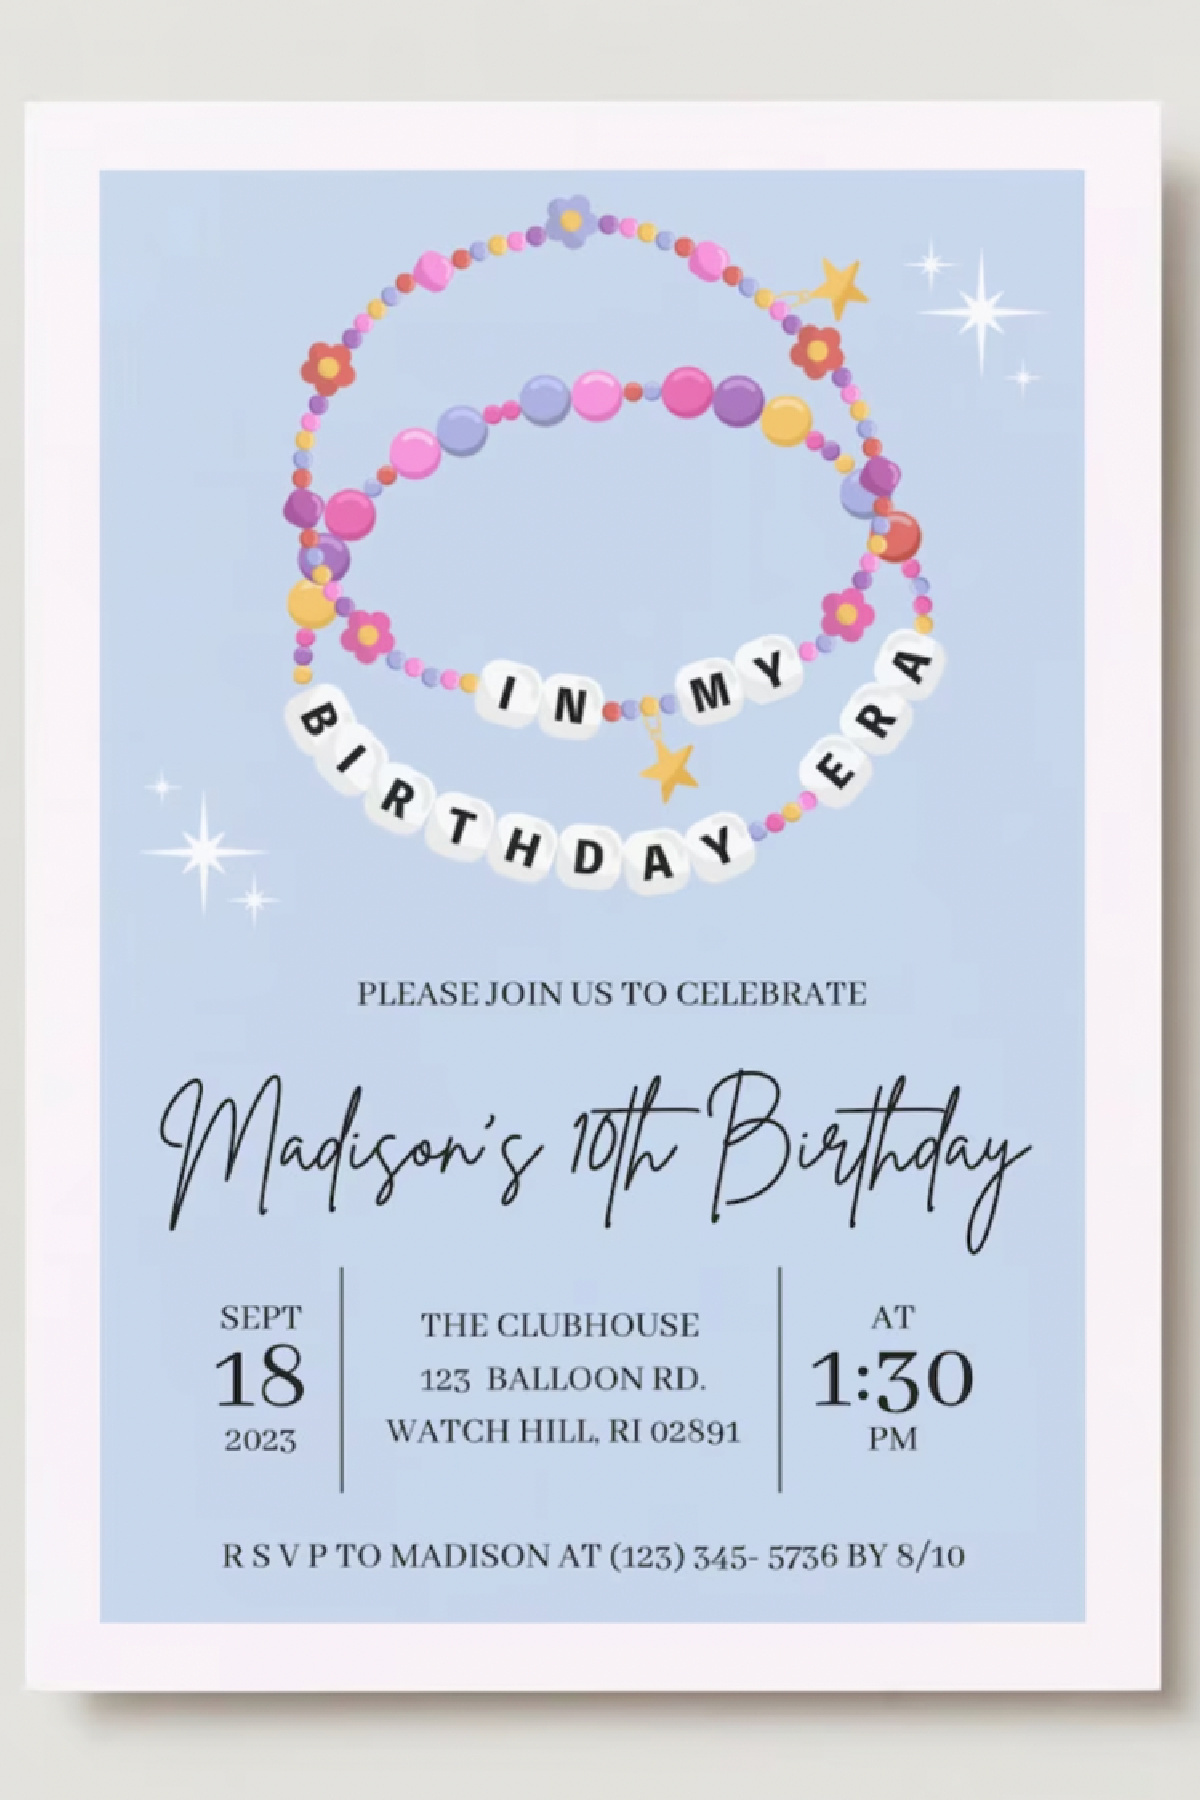 Friendship Bracelet-Themed Party Invitation